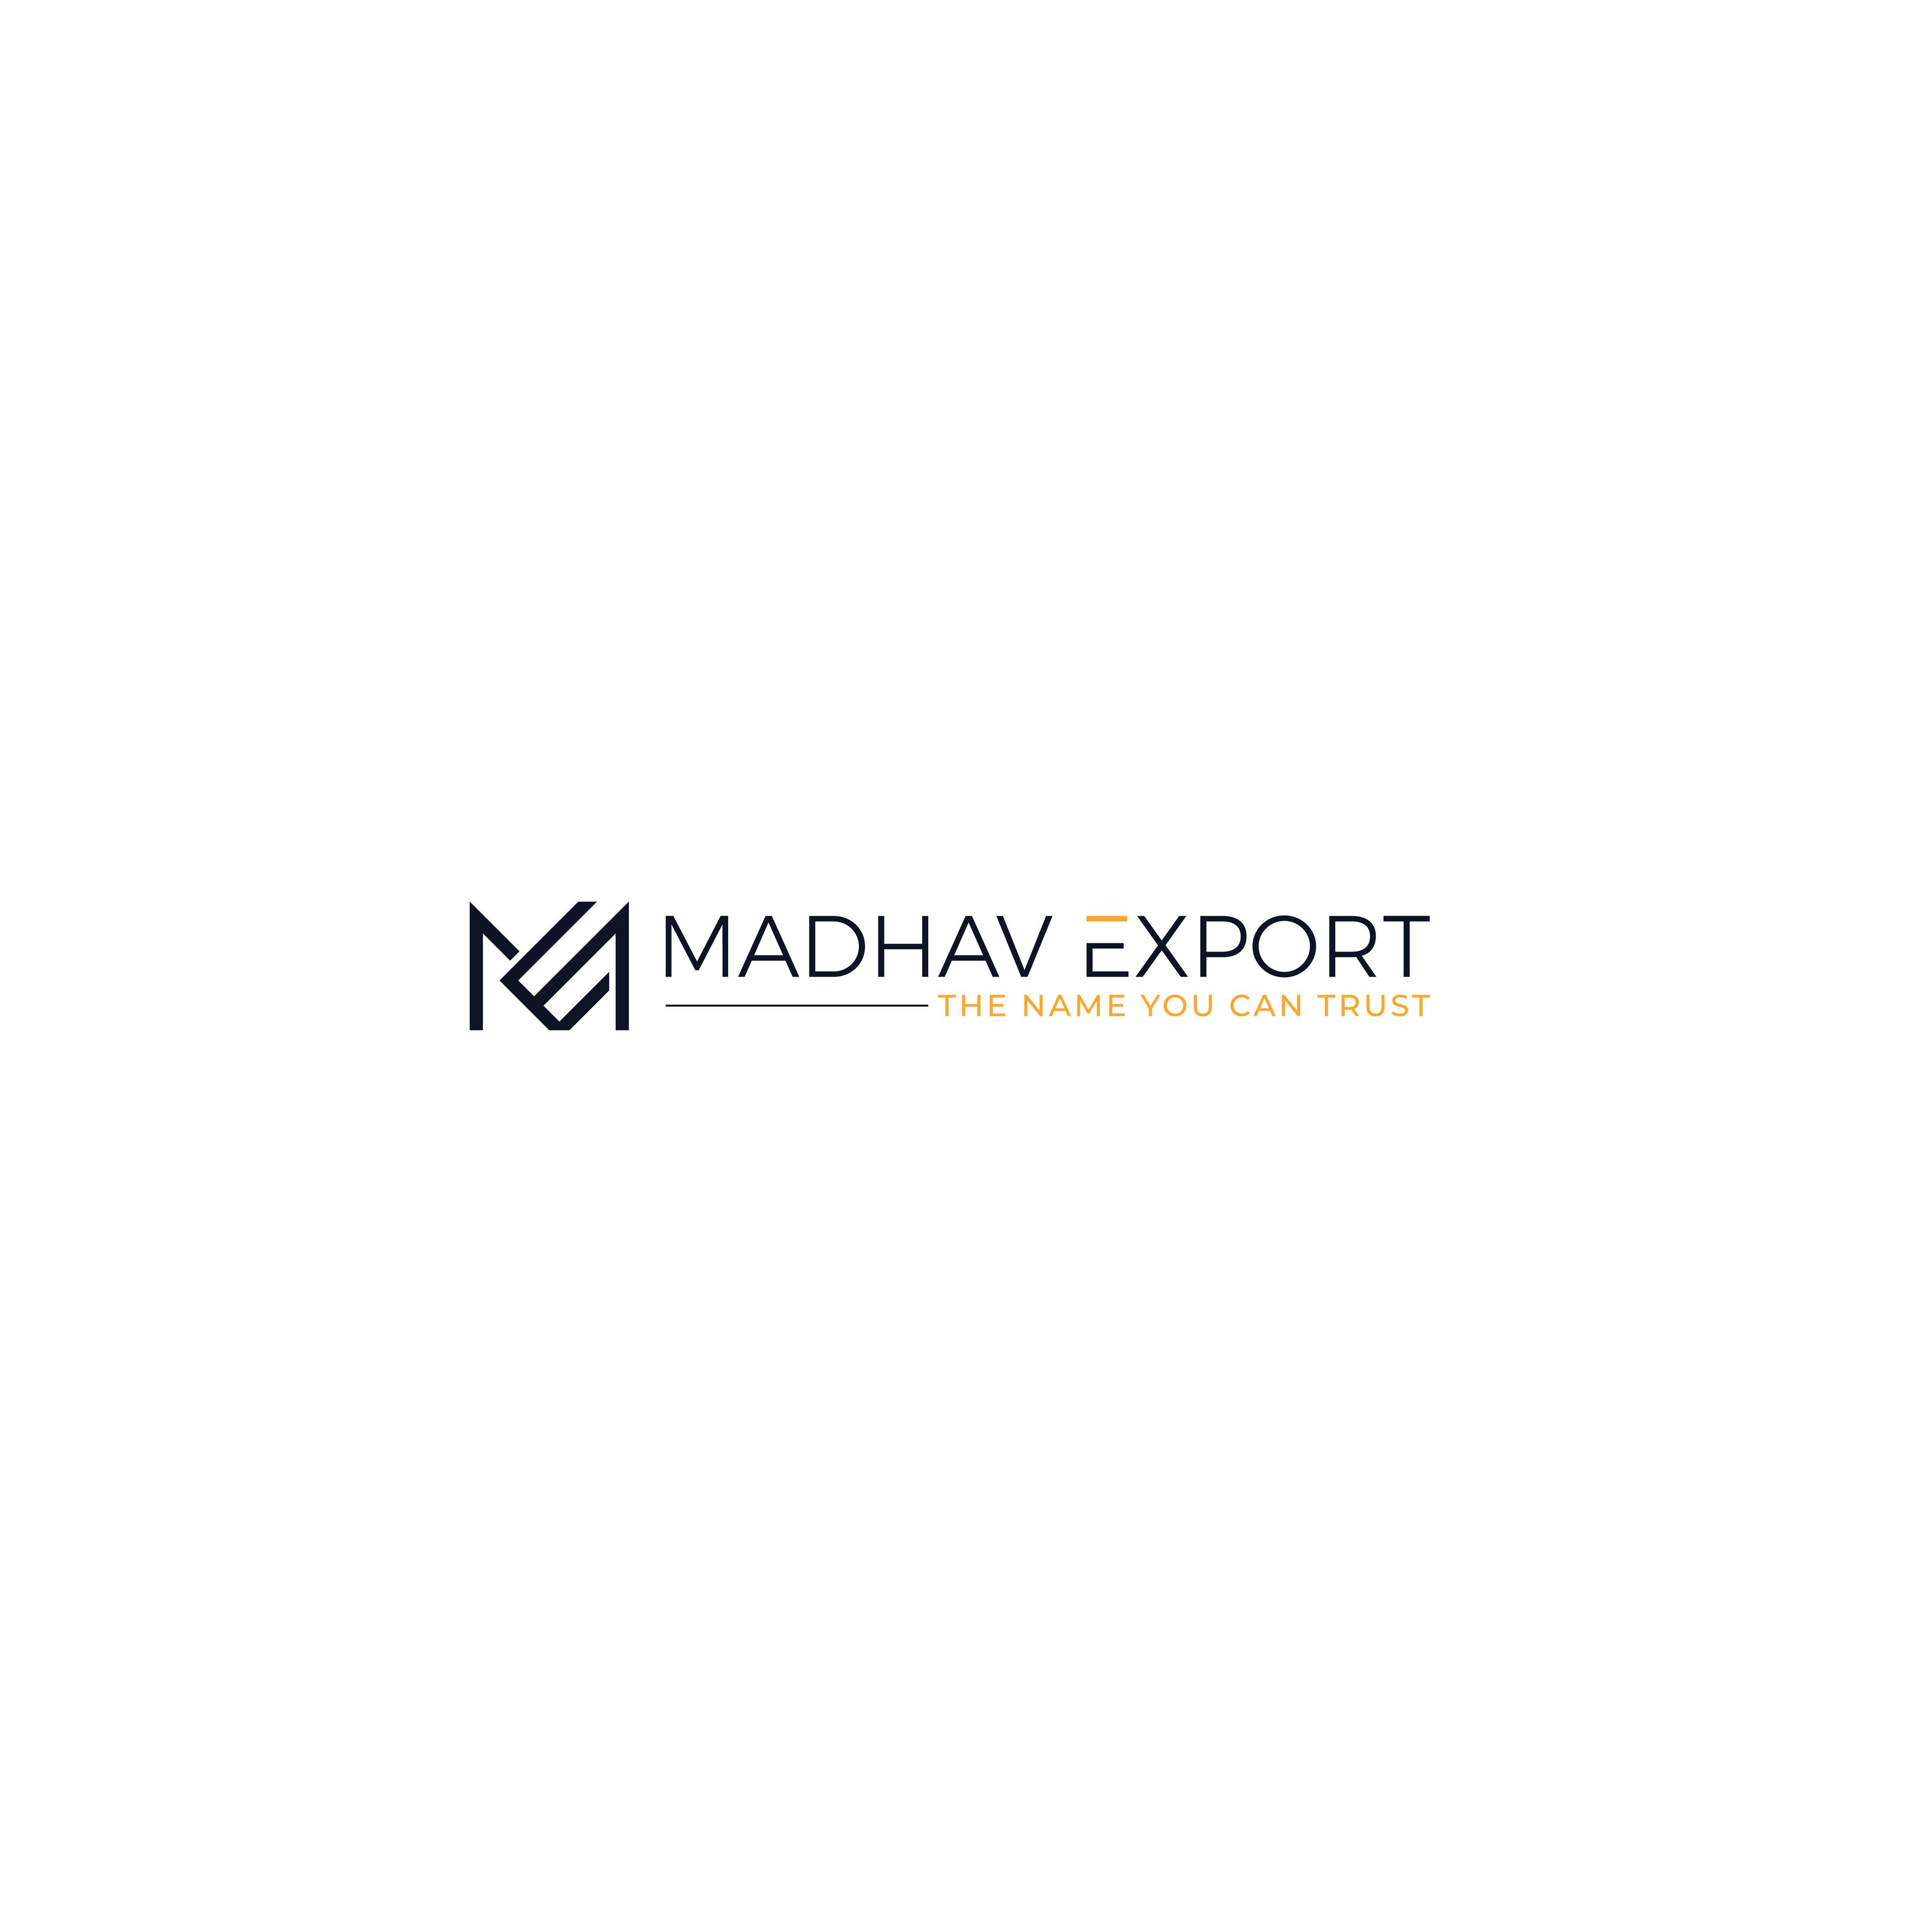 MADHAV EXPORT